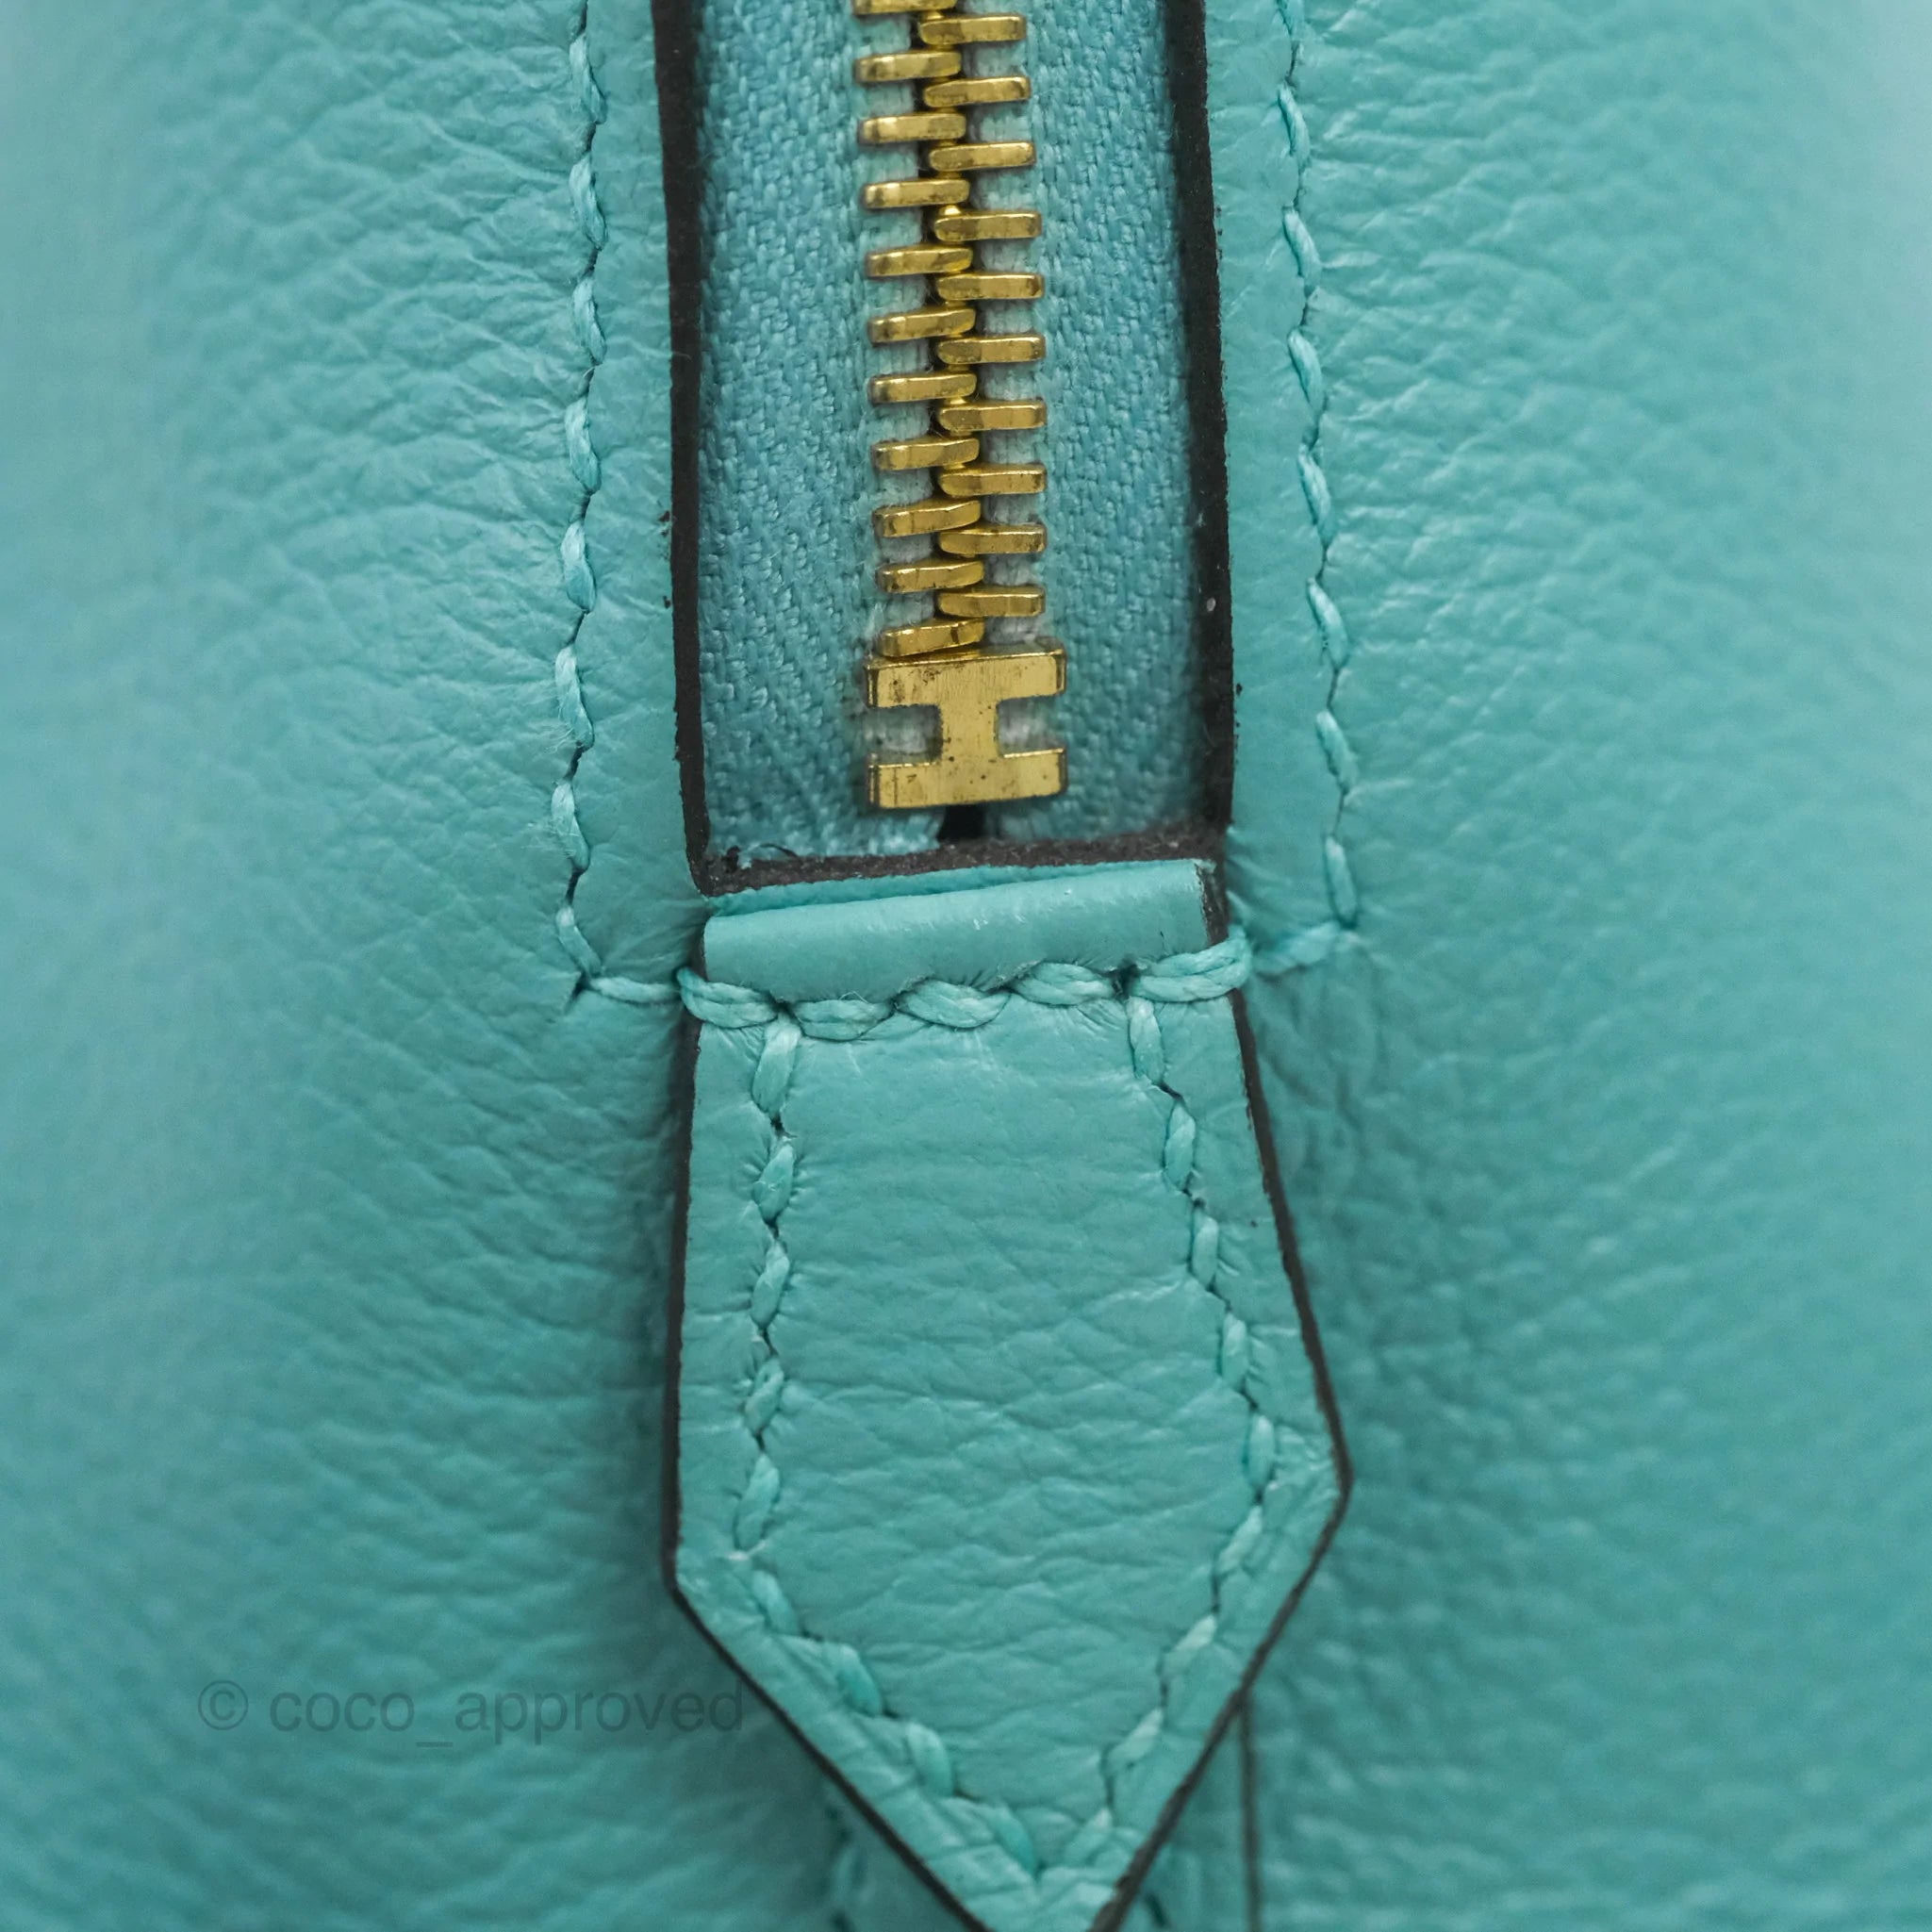 Hermès Bolide Mini Bleu Orage PHW - Kaialux